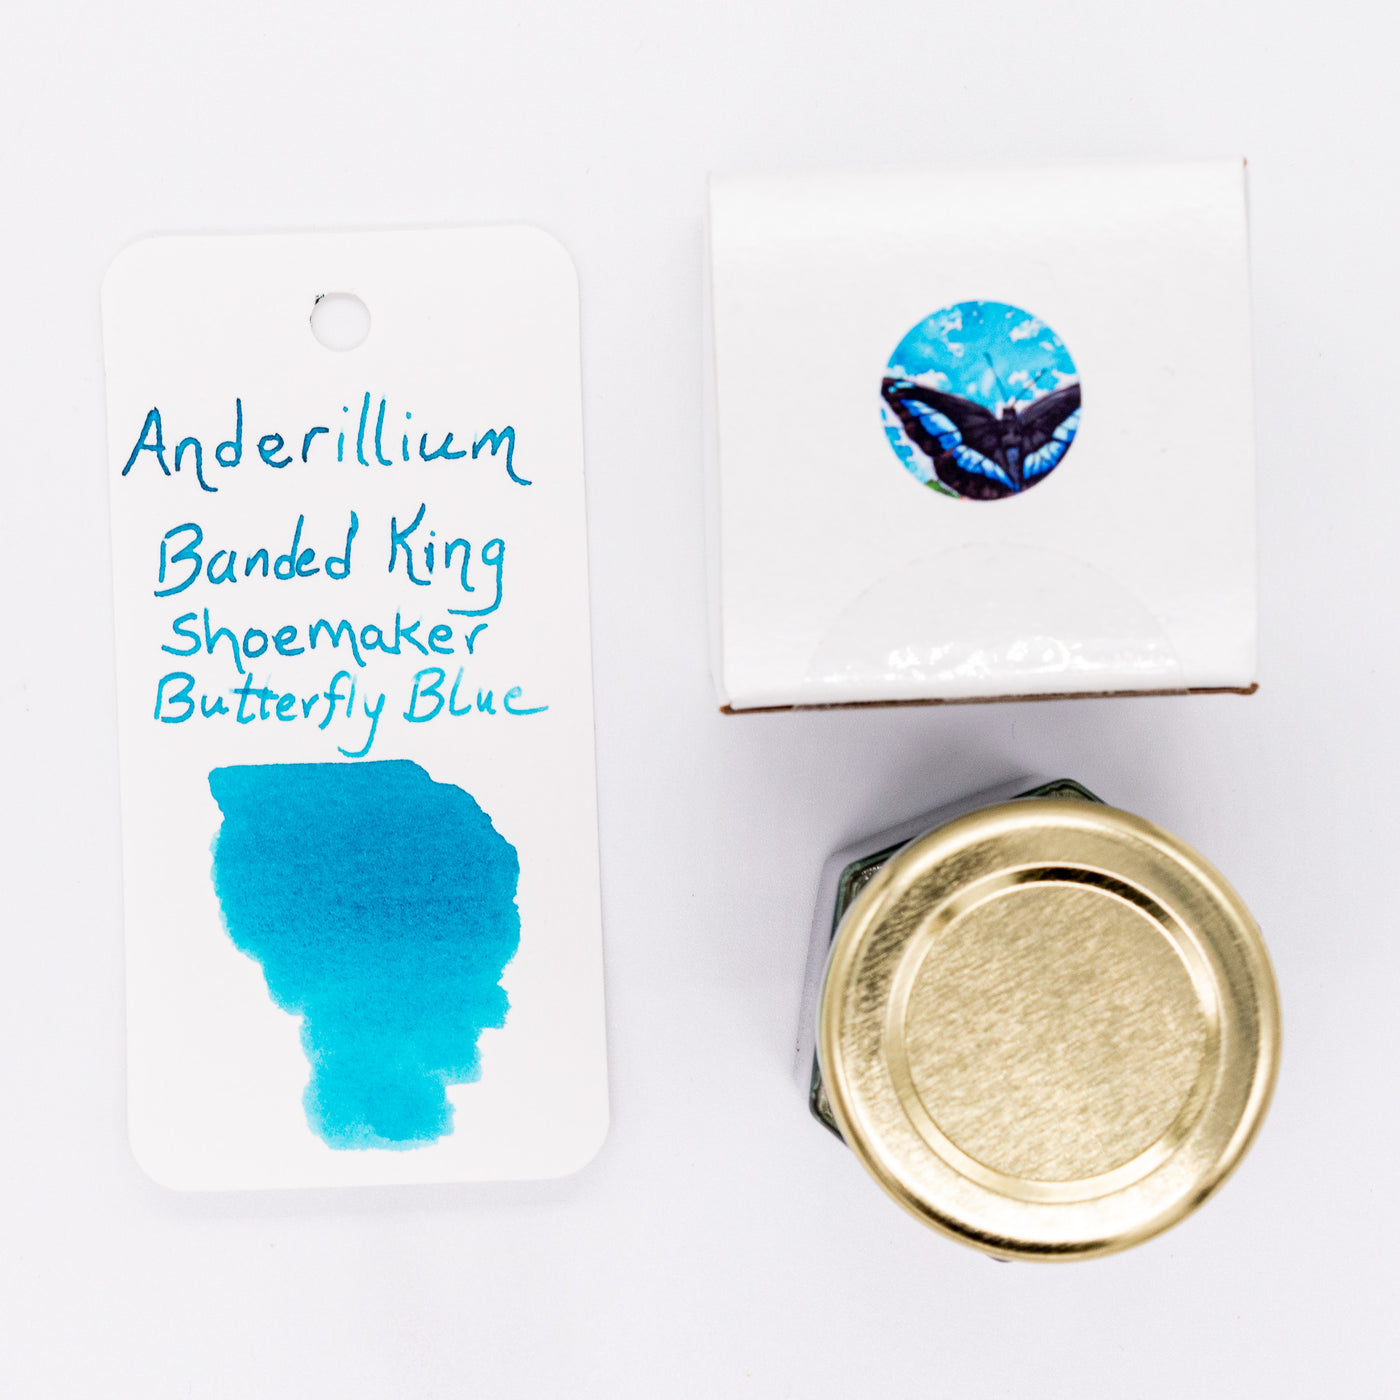 Anderillium Banded King Shoemaker Butterfly Blue Ink Bottle 1.5oz glass